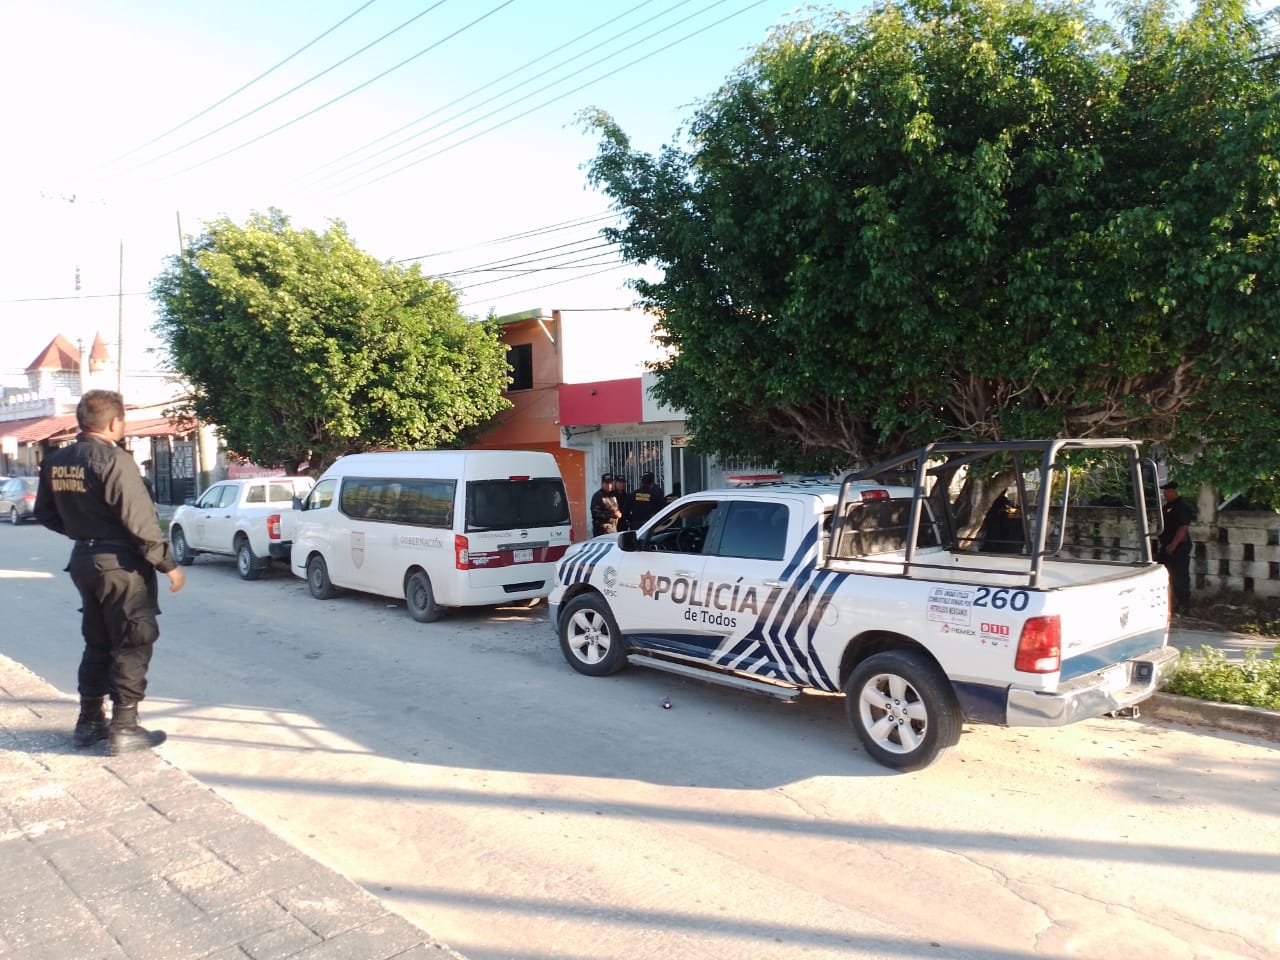 Los cubanos viajaban en tres vehículos con destino a Cancún, Quintana Roo